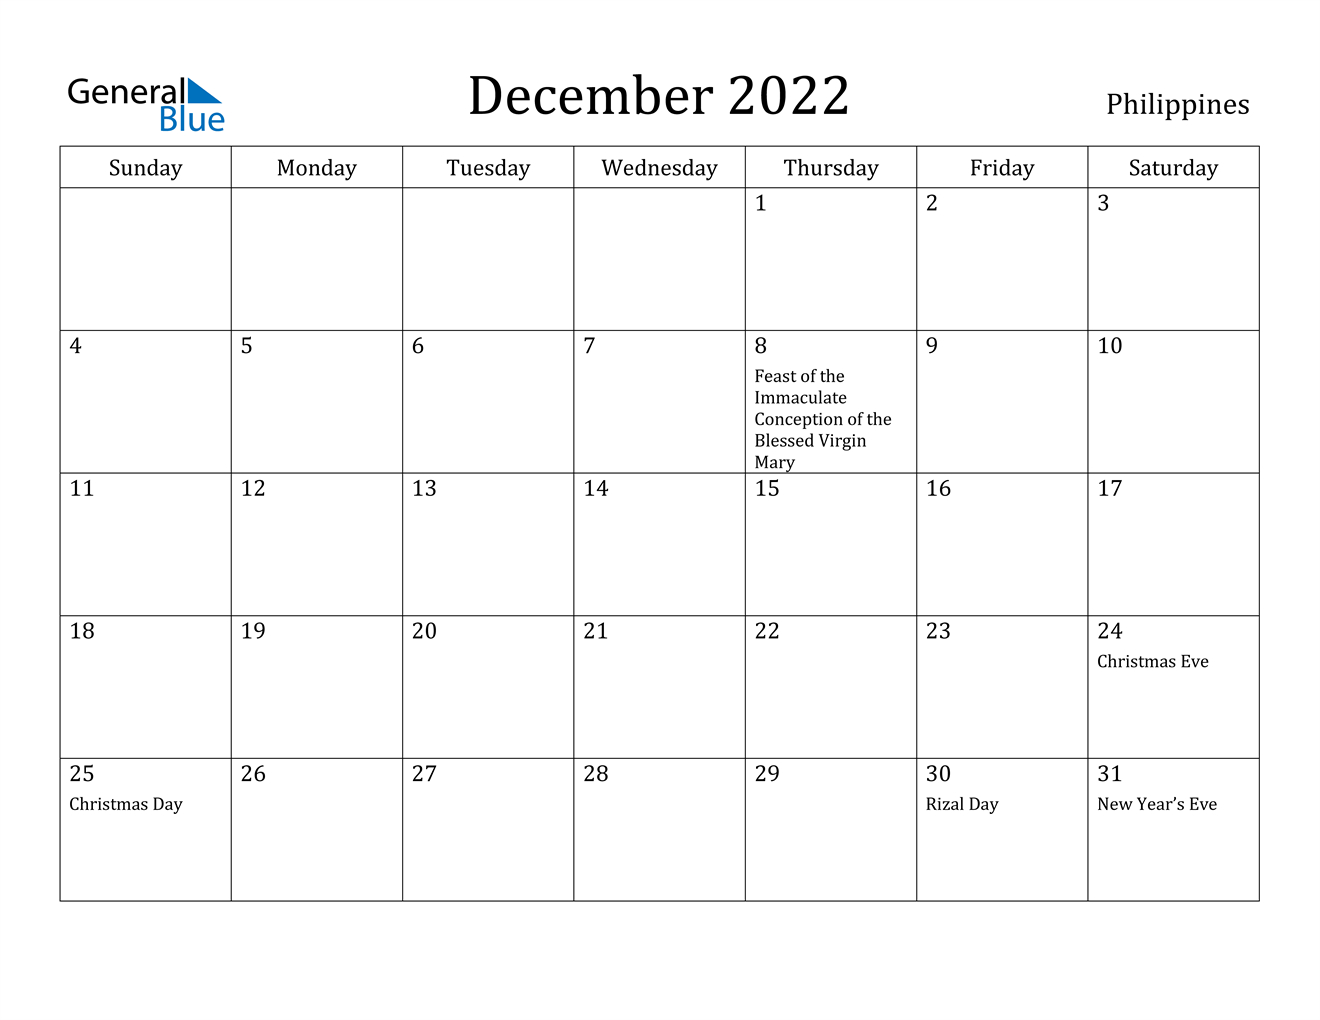 December 2022 Calendar - Philippines